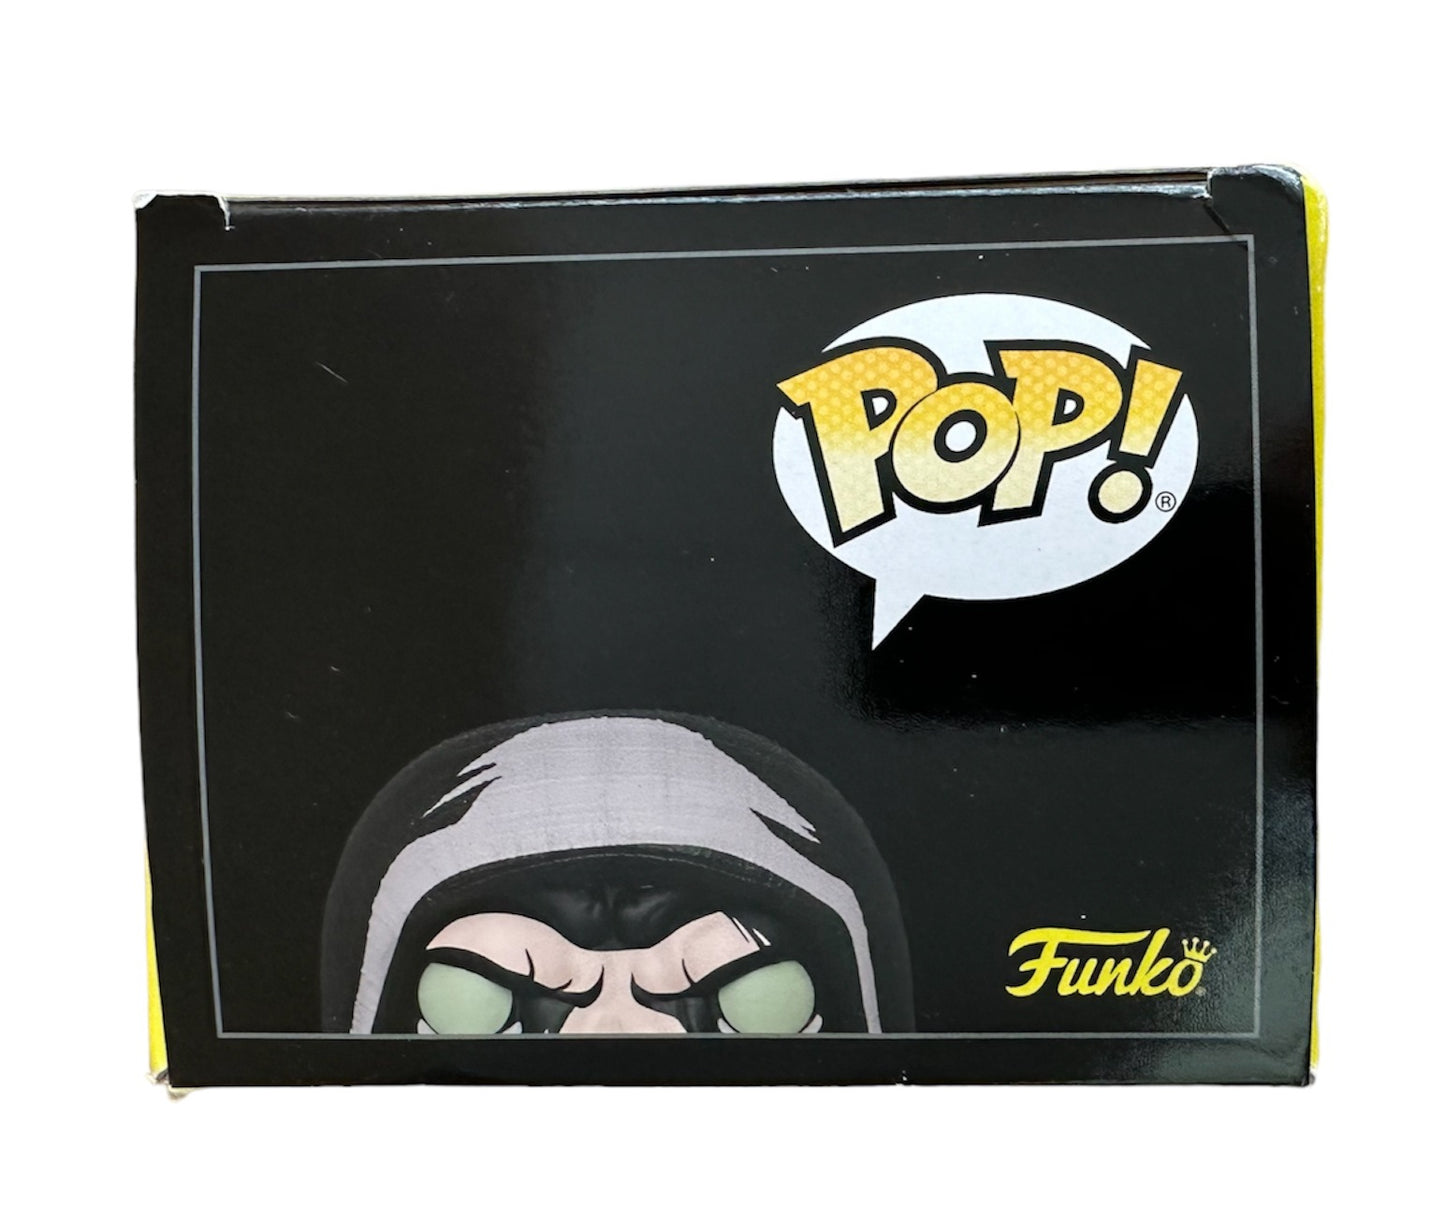 Funko 2022 - Star Wars - Emperor Palpatine Pop Vinyl Bobble Head Figure No. 573 - Target Exclusive - Brand New Factory Sealed6 - Brand New Shop Stock Room Find